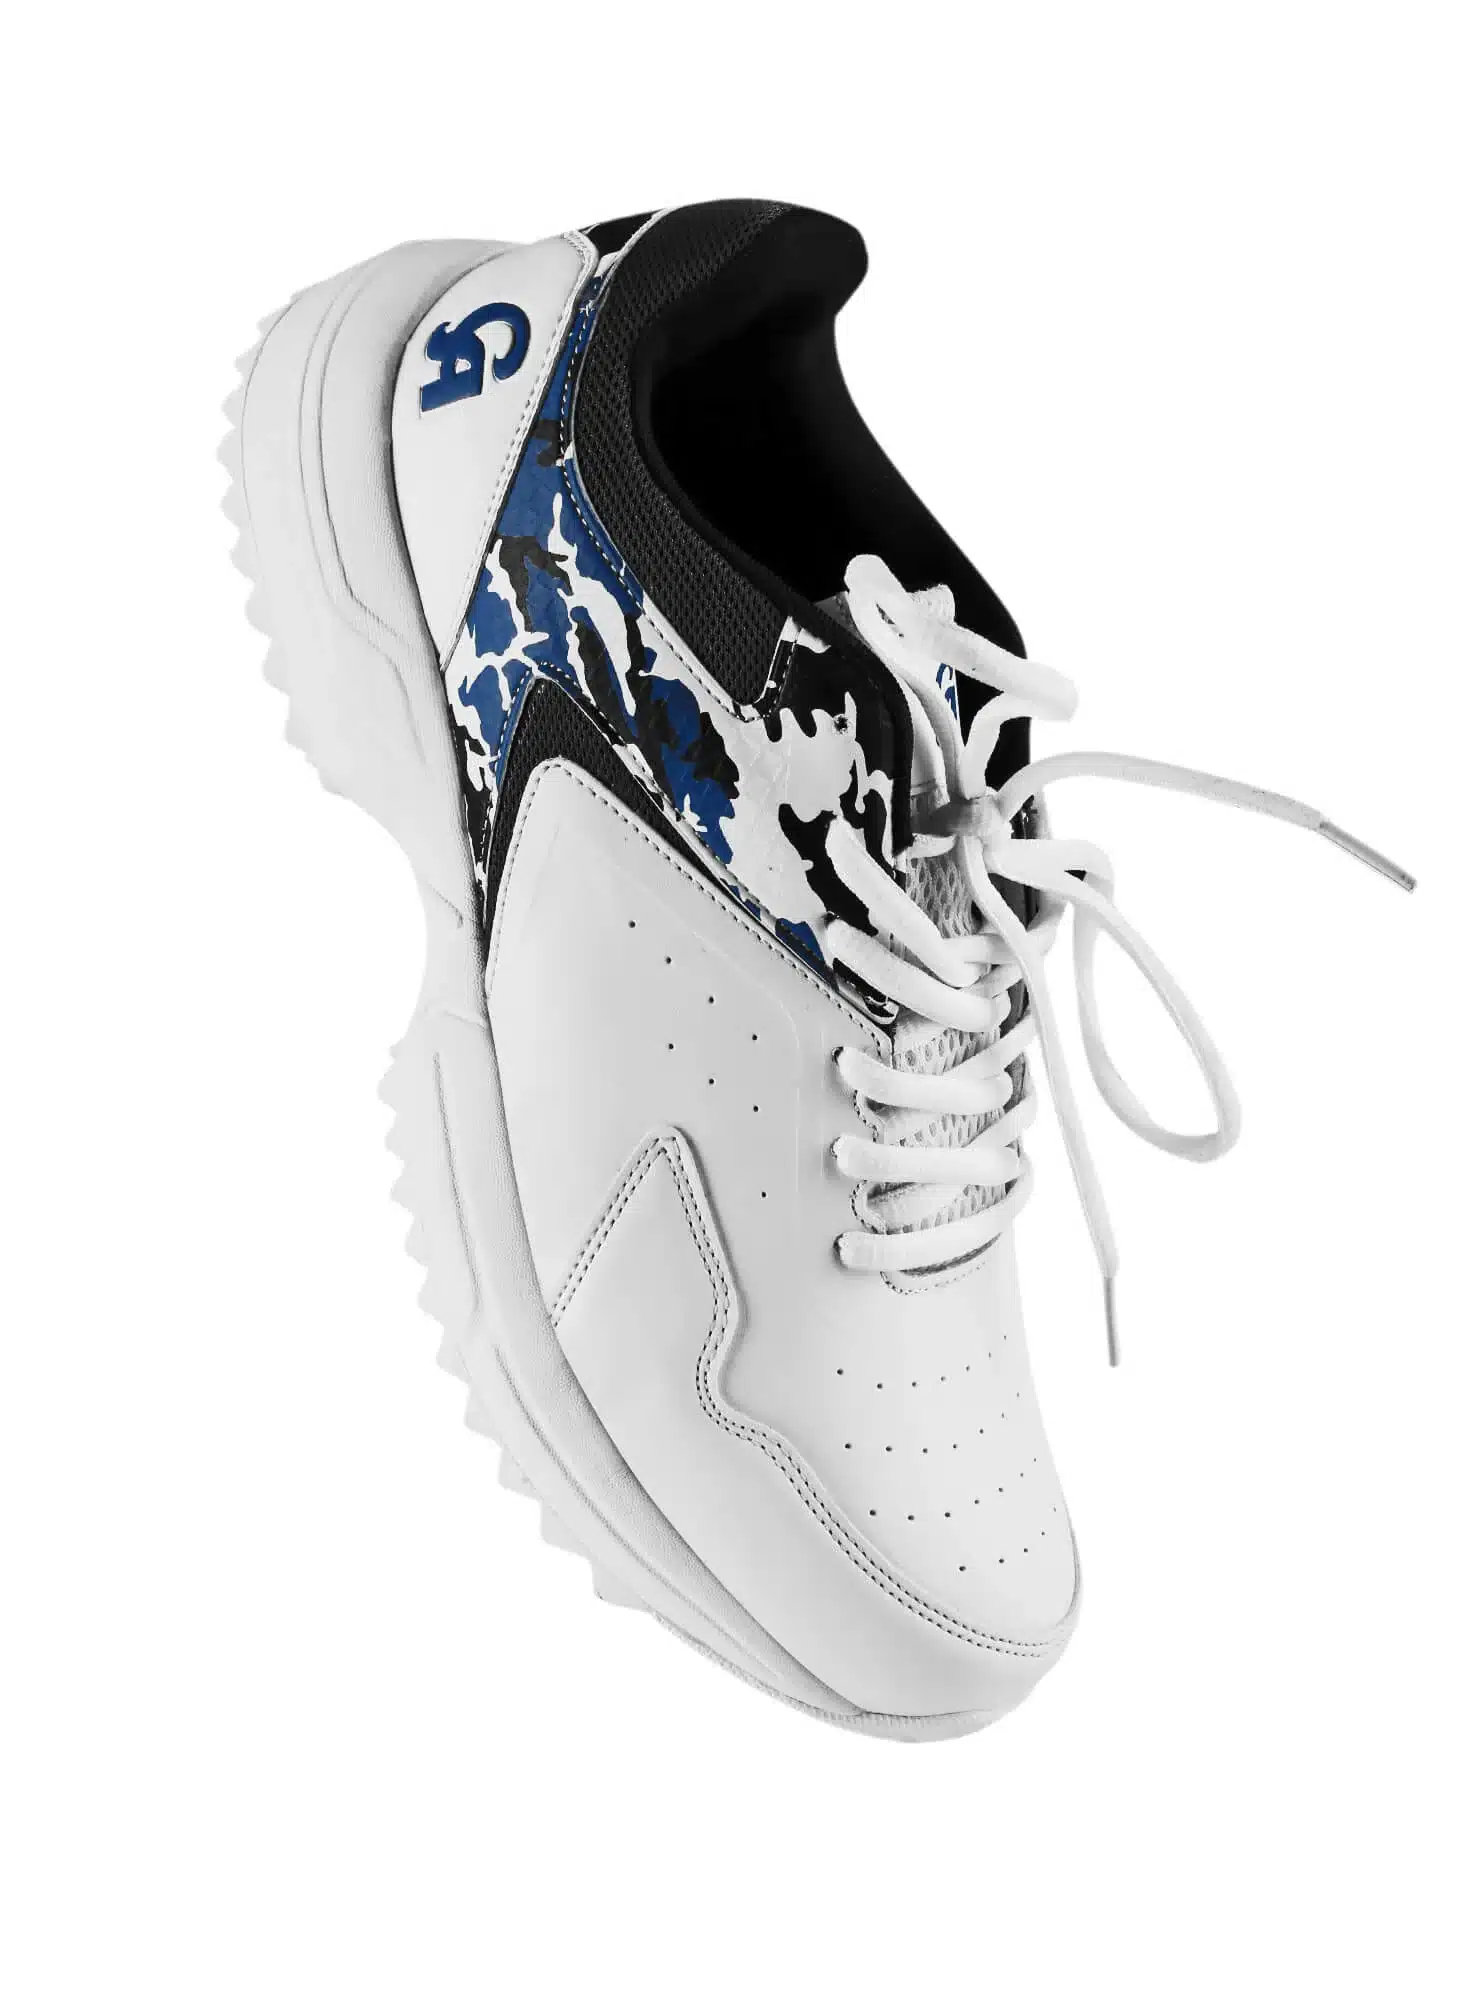 CA-R1 Cricket Shoes (Camo/White)